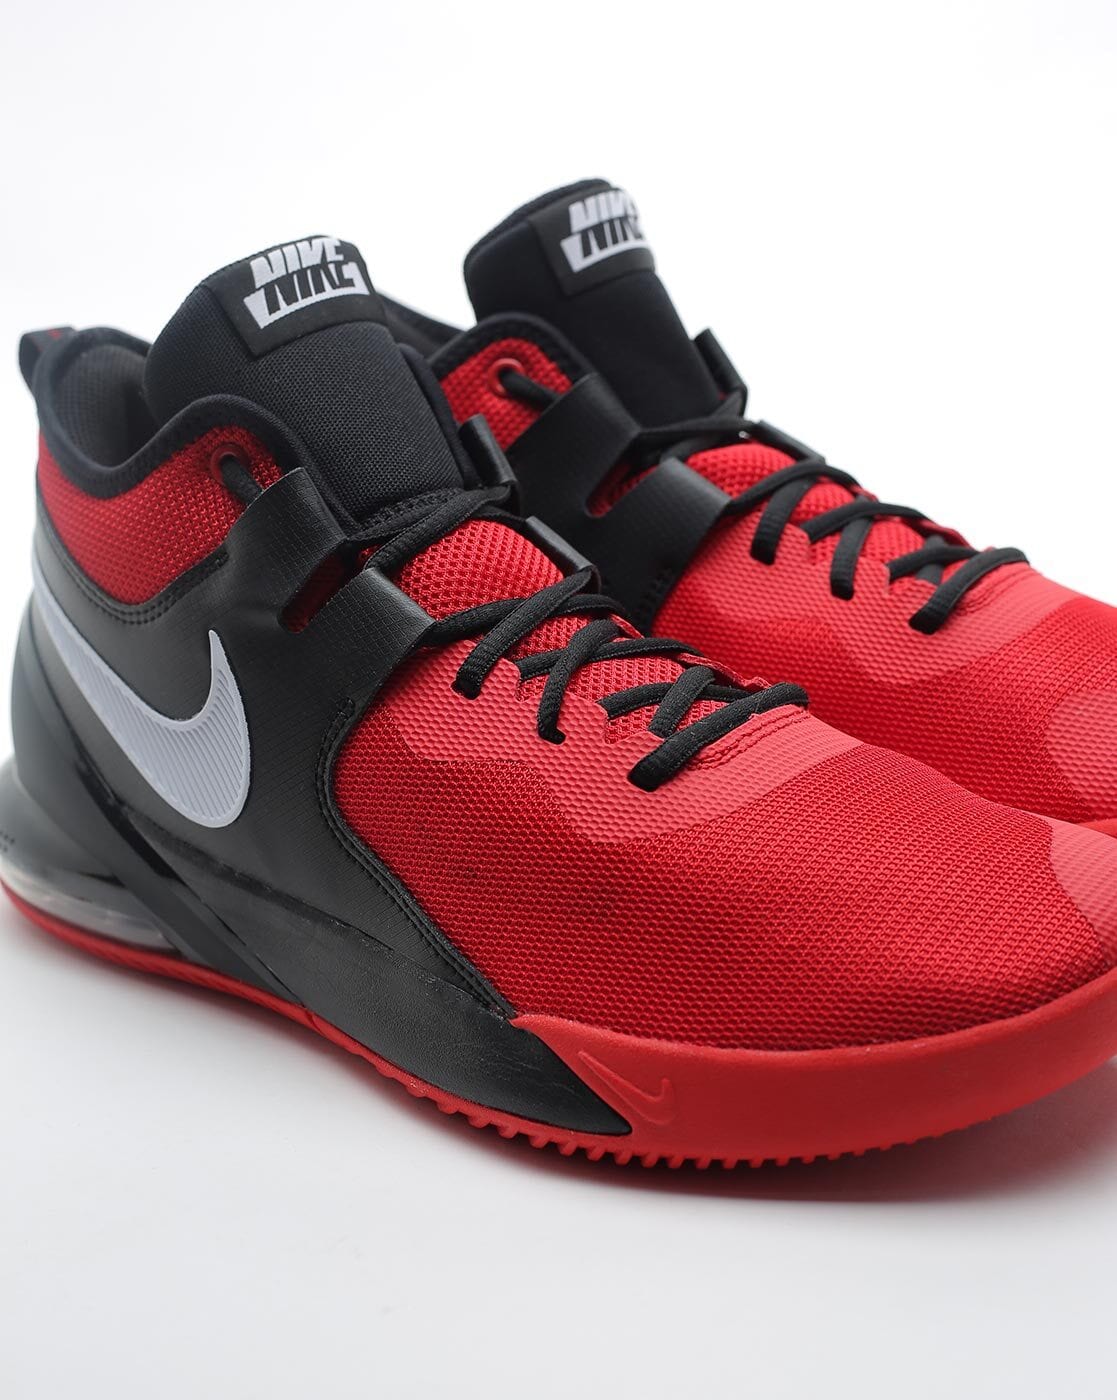 Boys Nike Basketball Shoes Cheap Selling, Save 66% | jlcatj.gob.mx